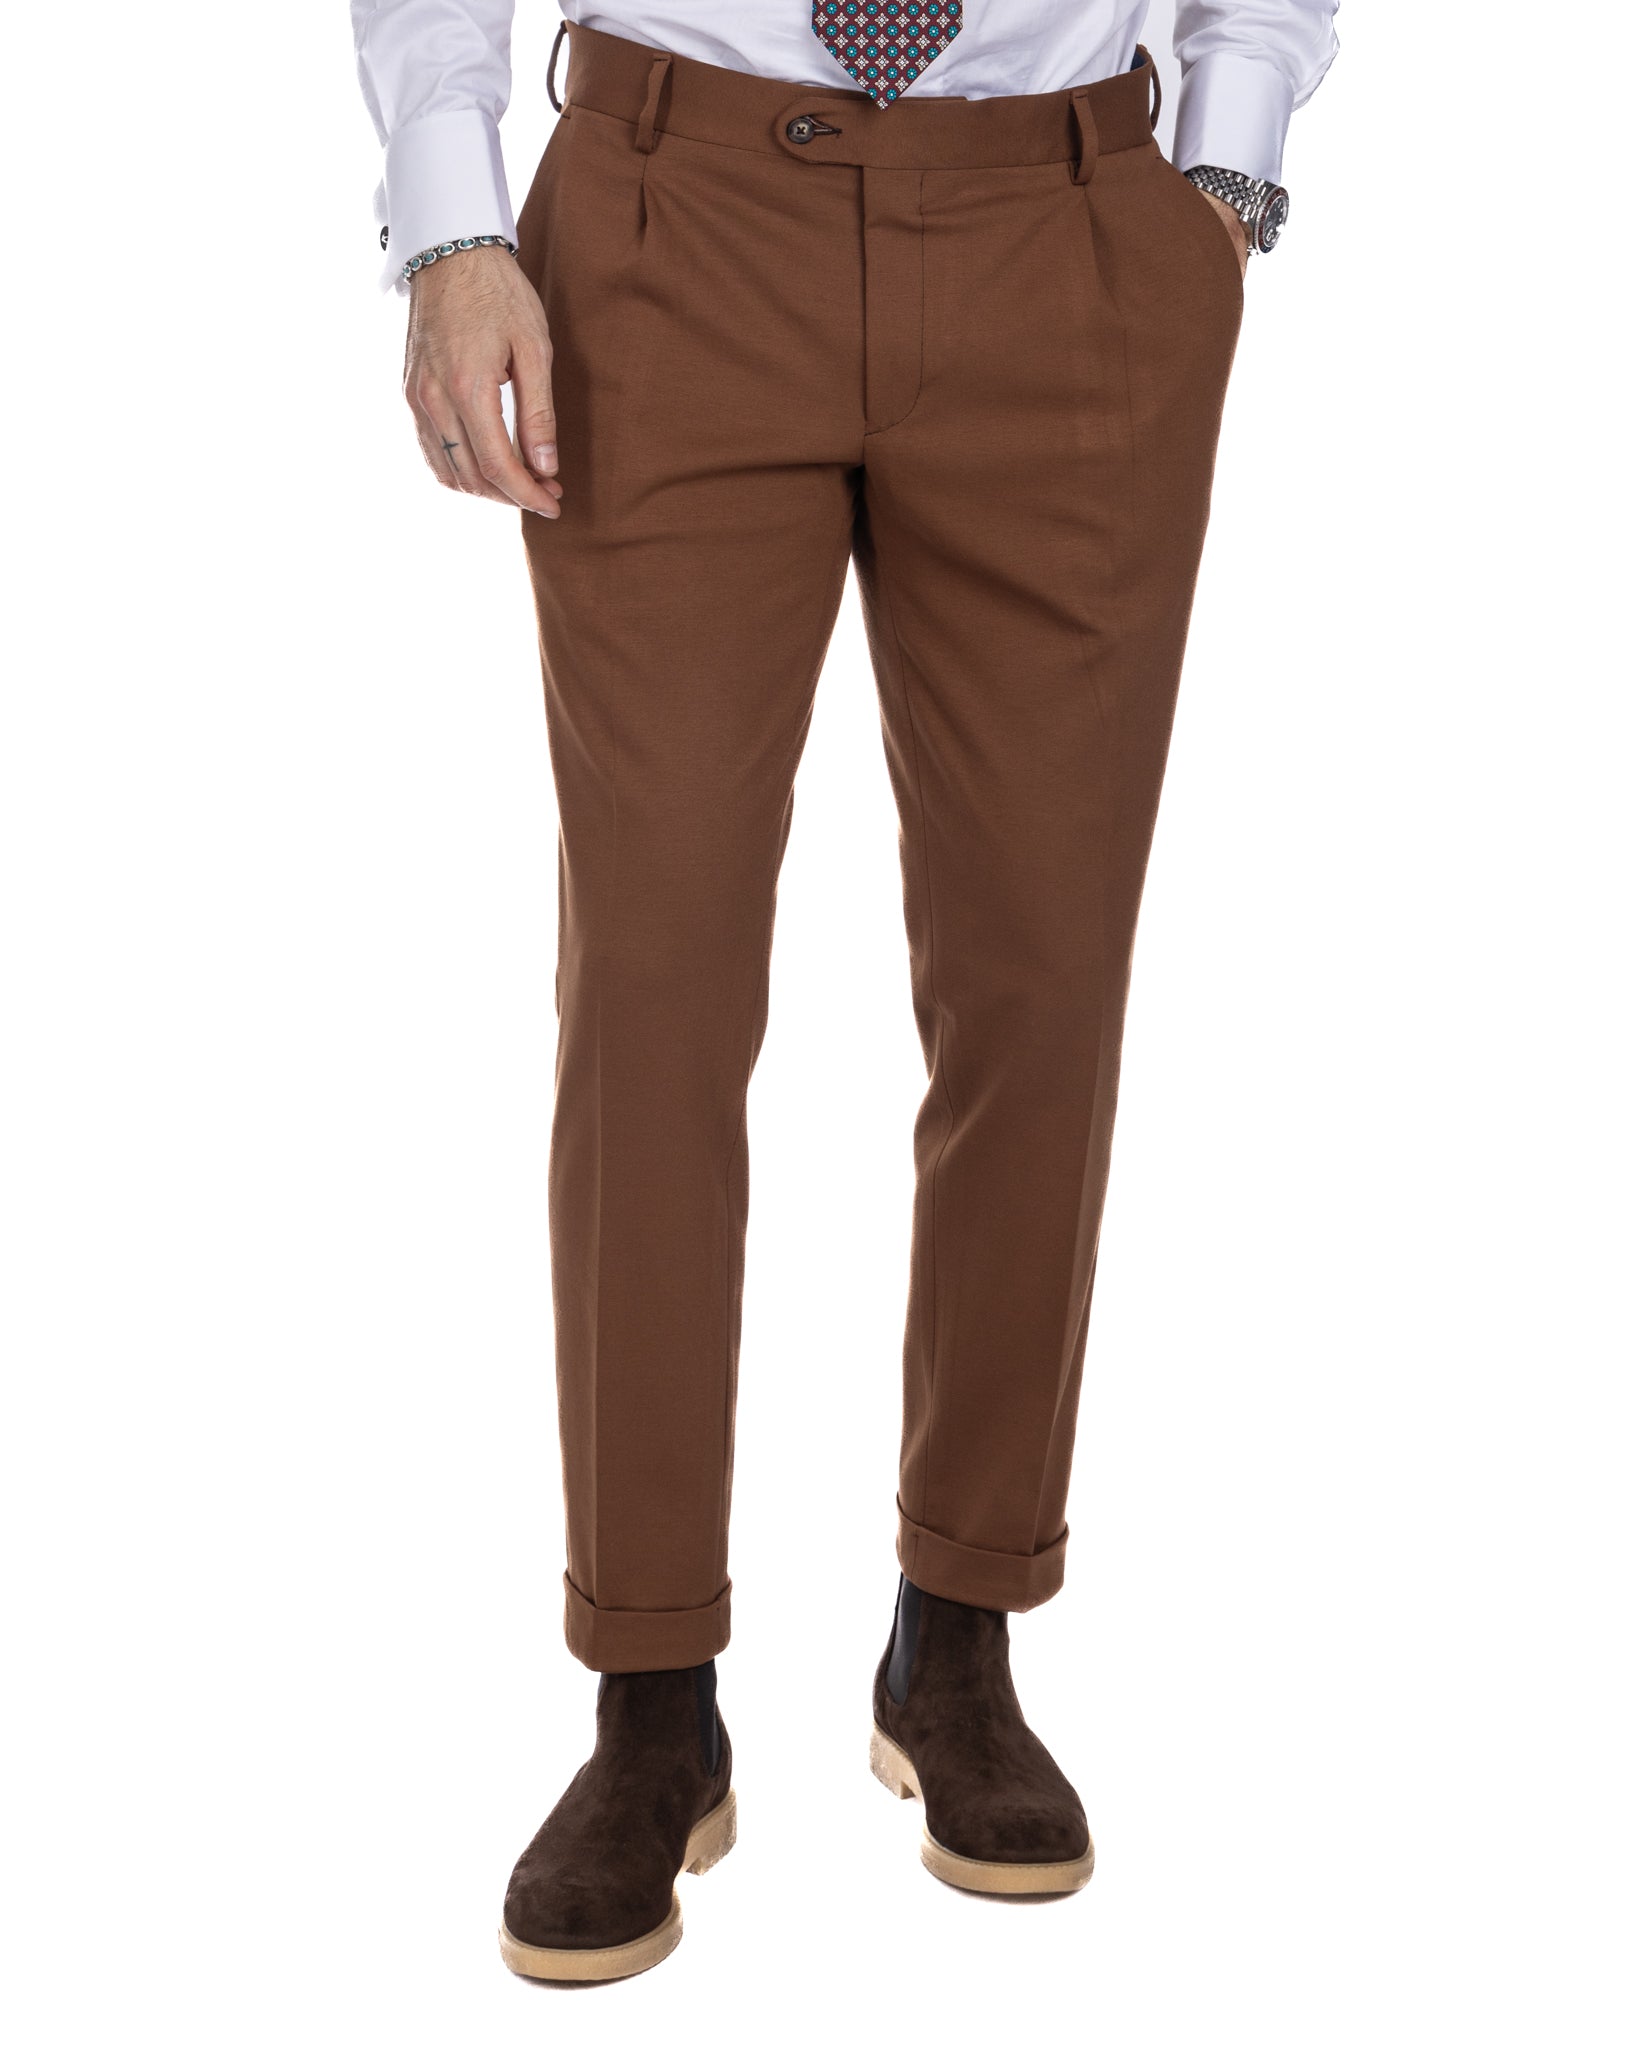 Firenze - dark brown tailored trousers in Milan stitch